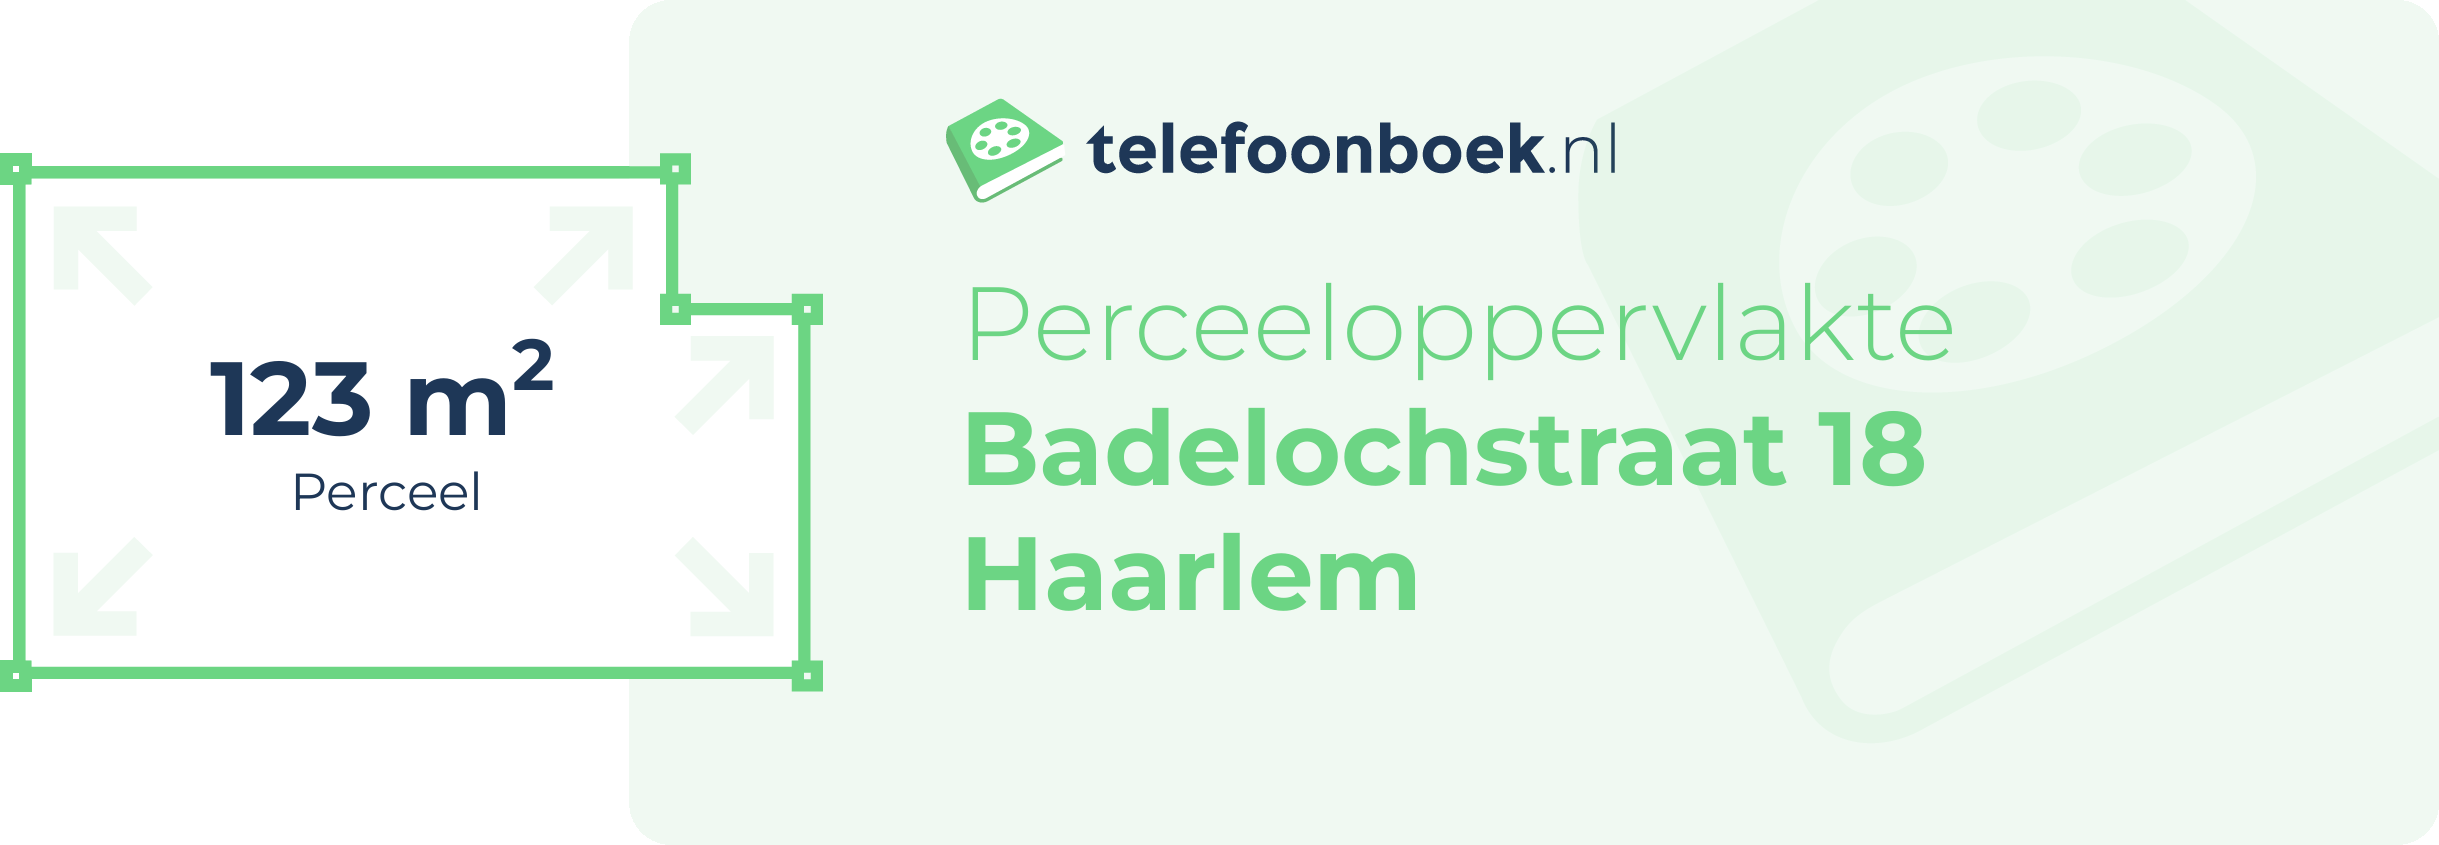 Perceeloppervlakte Badelochstraat 18 Haarlem